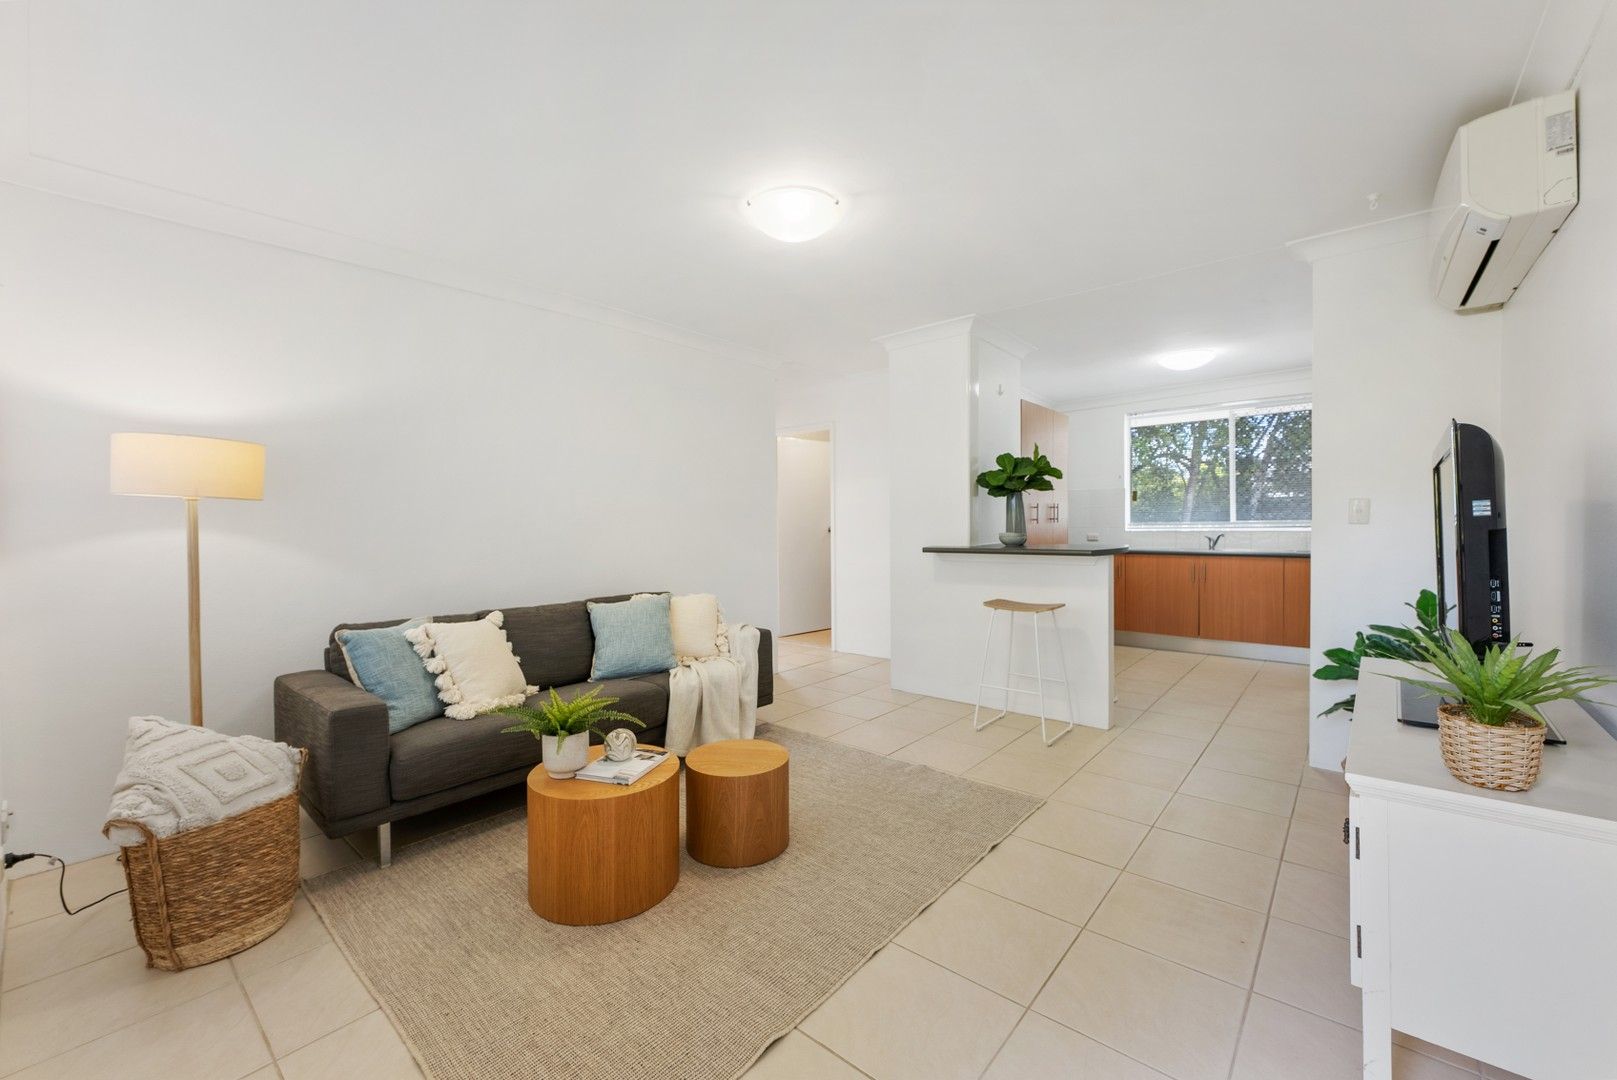 2 bedrooms House in 4/32 Farrington Street ALDERLEY QLD, 4051